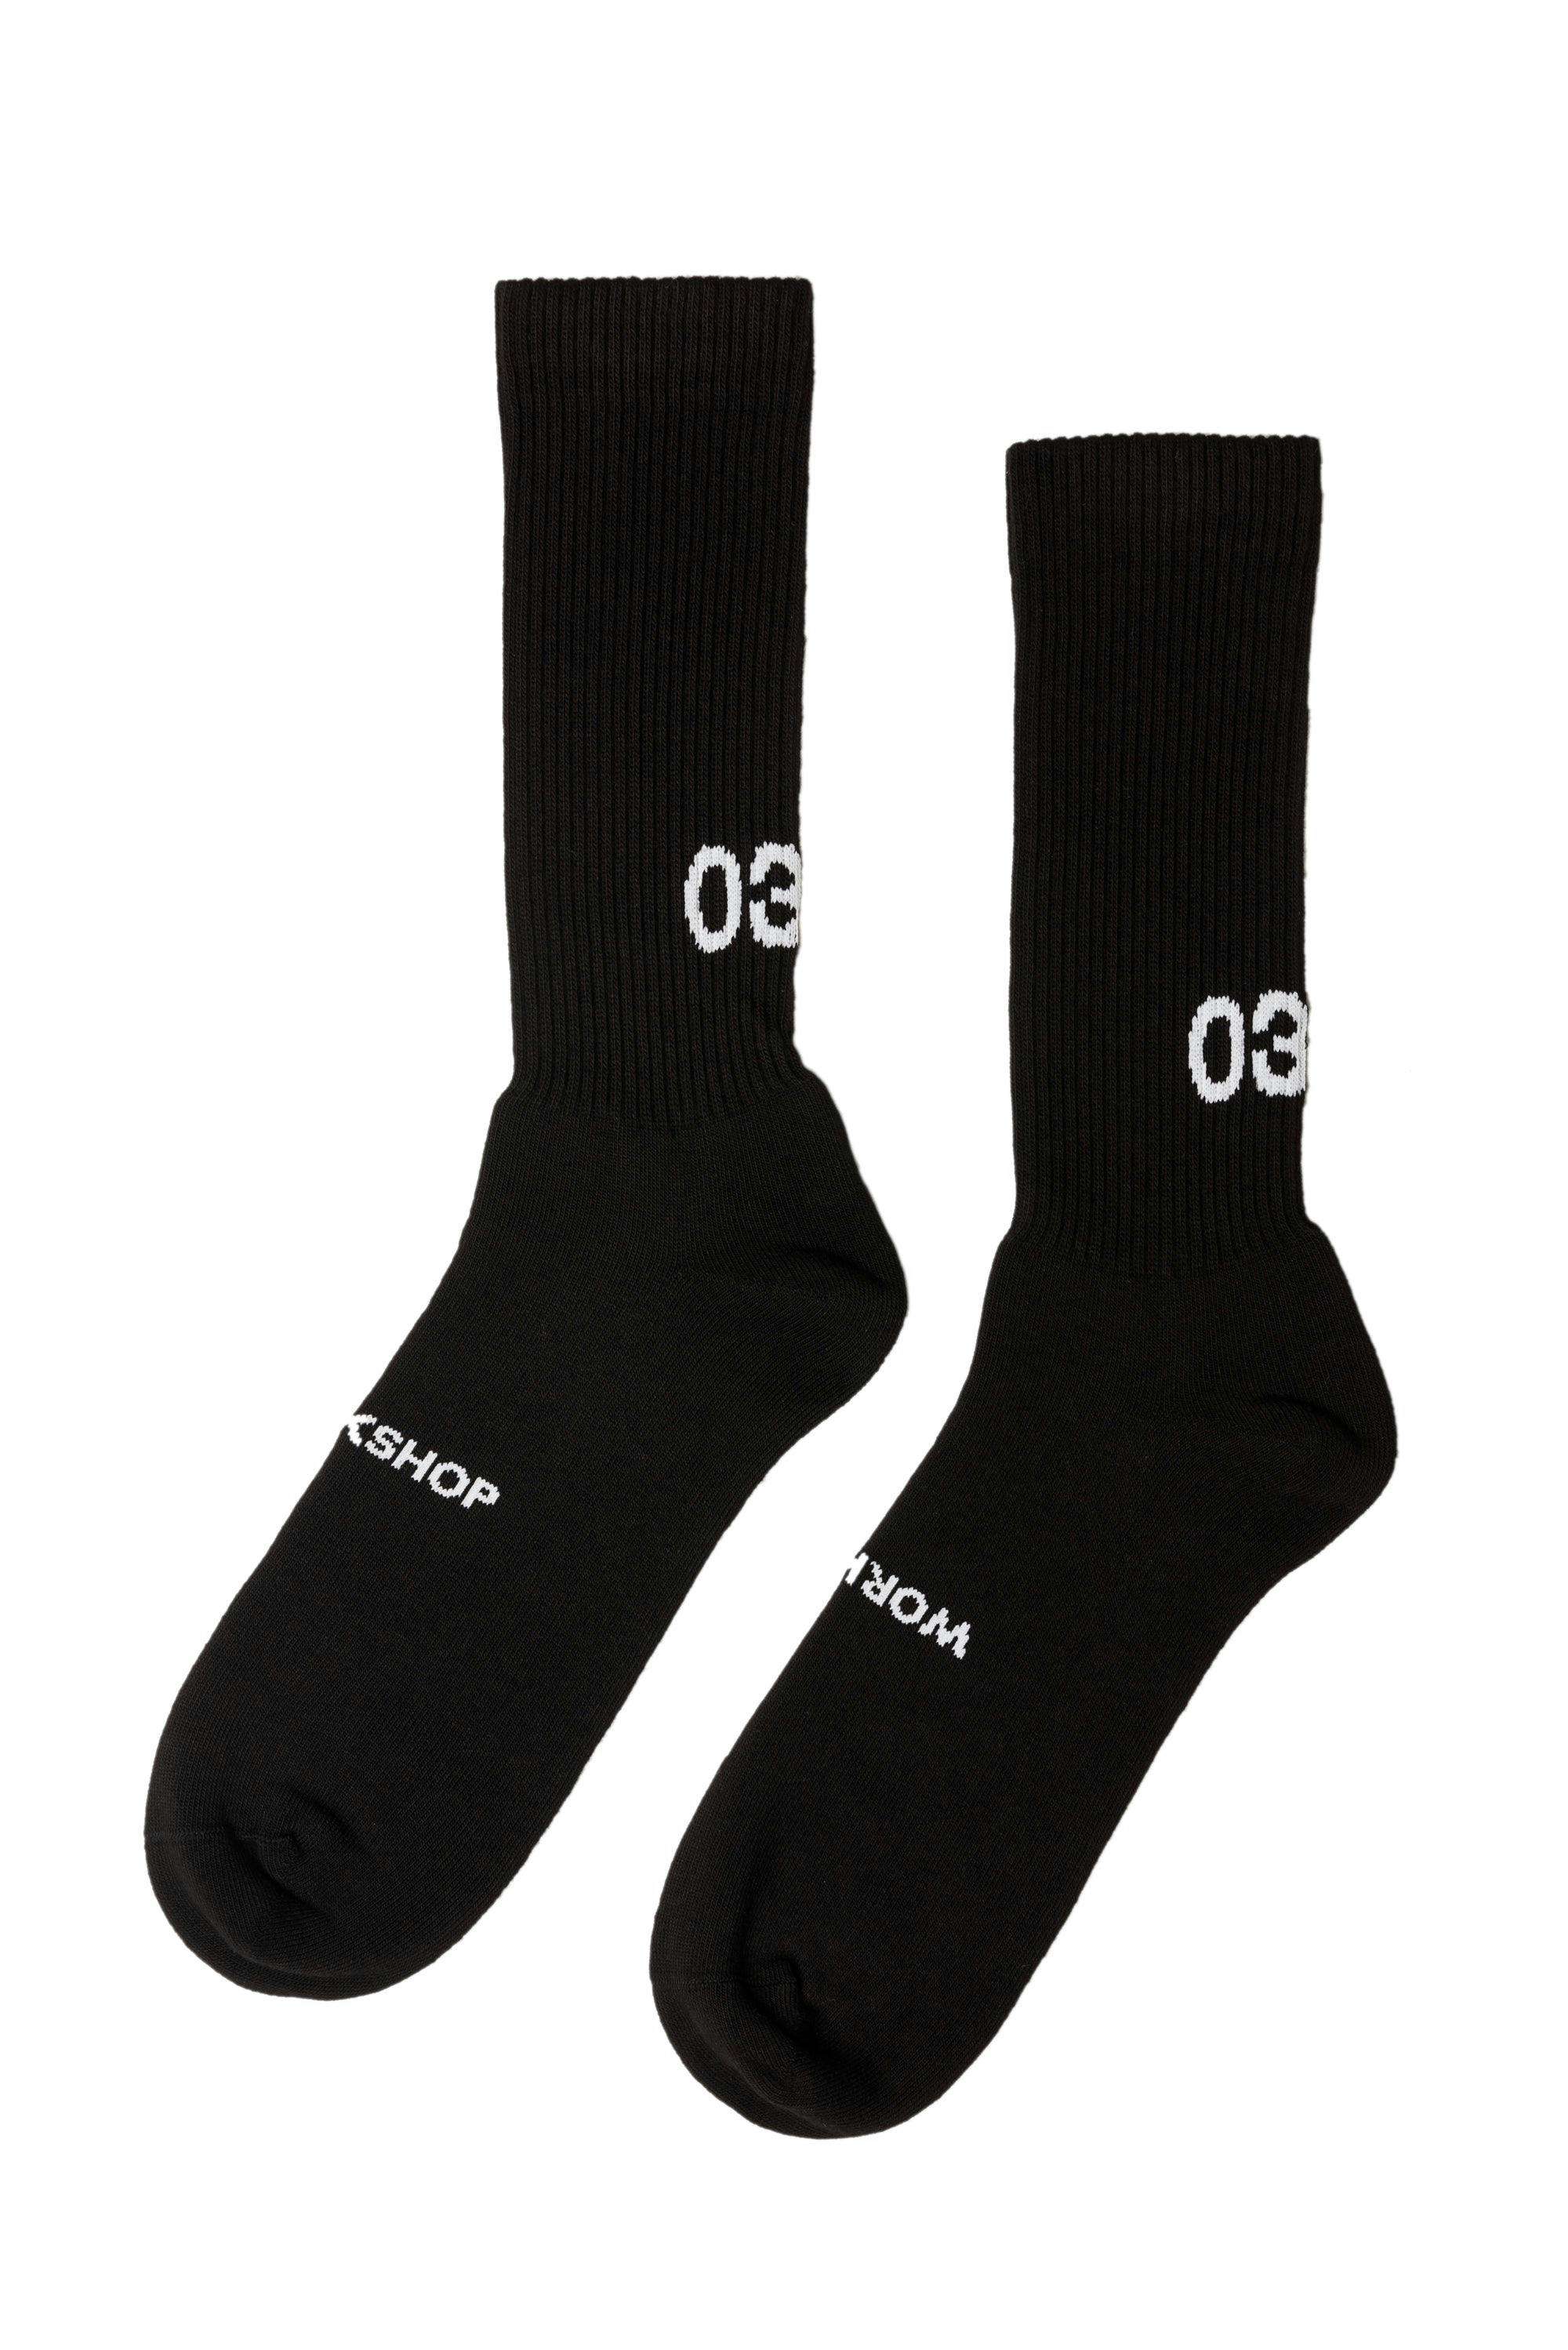 032c Socks Workshop Black/White - SP20-A-1010